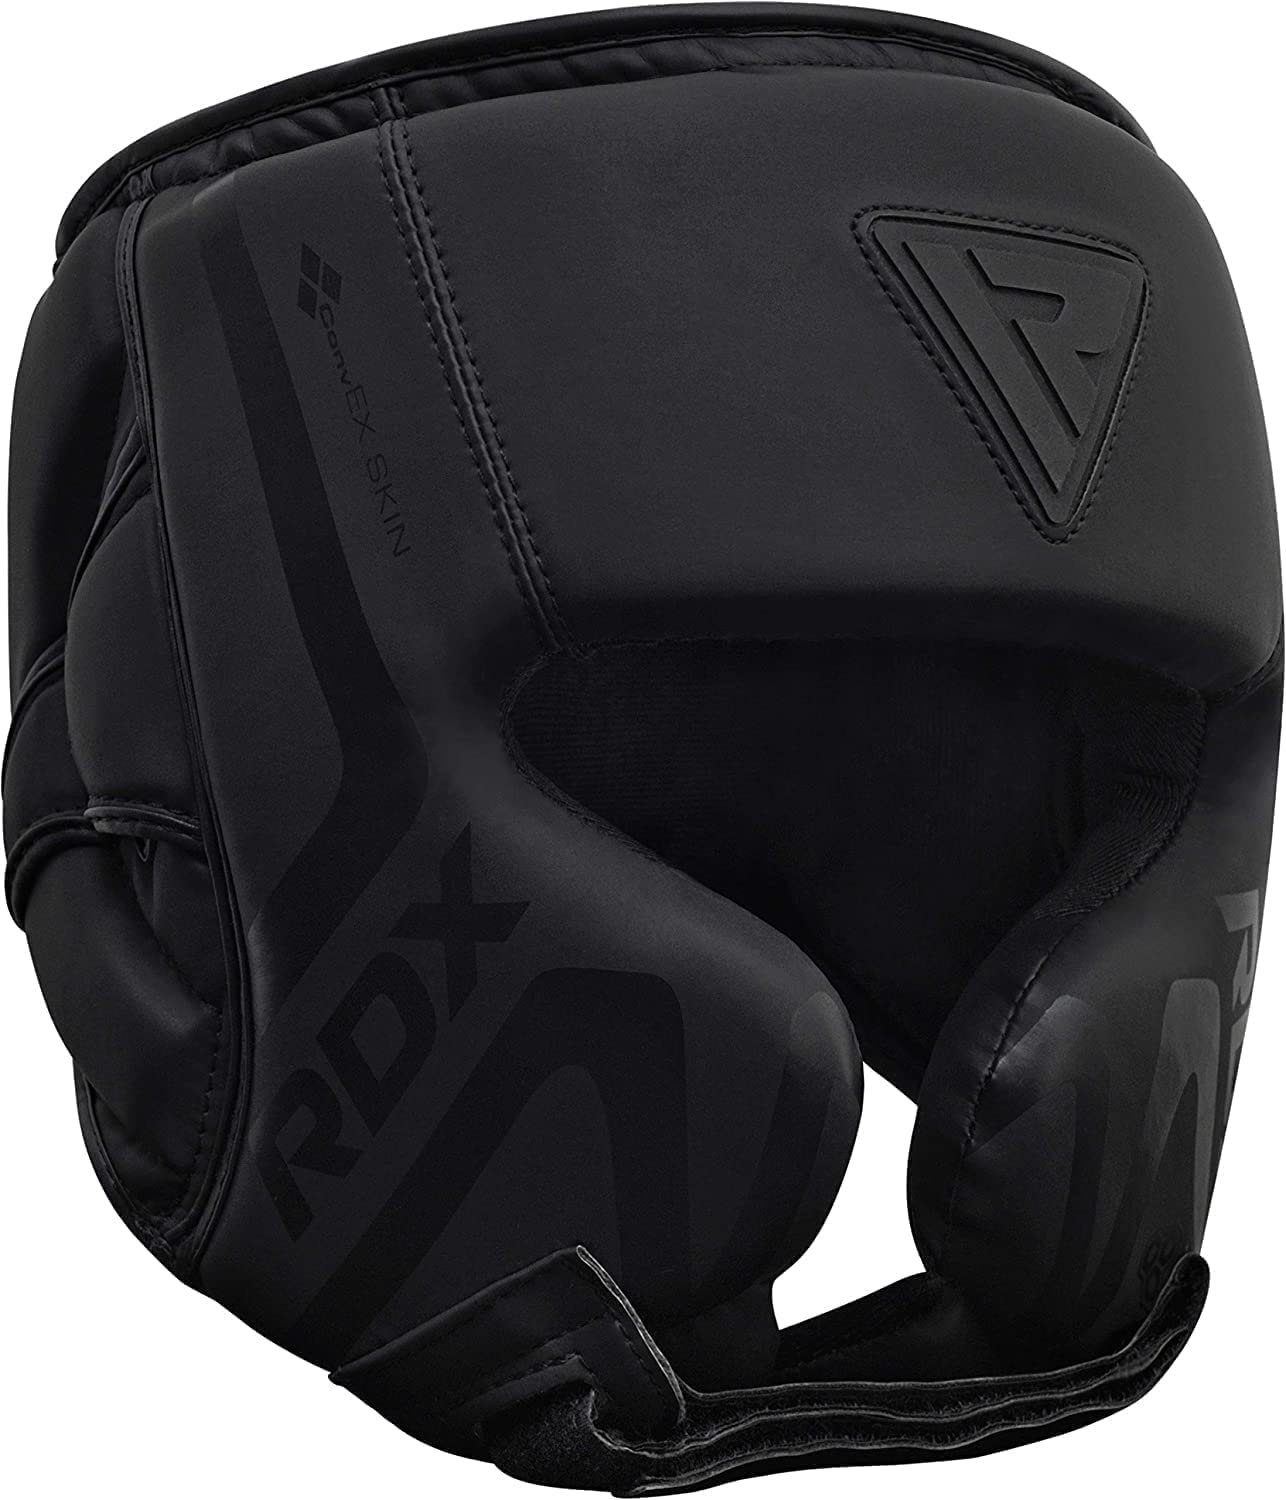 RDX Sports Kopfprotektor RDX Kopfschutz Boxen, Kopfschutz Thai Boxen Gesichtsschutz